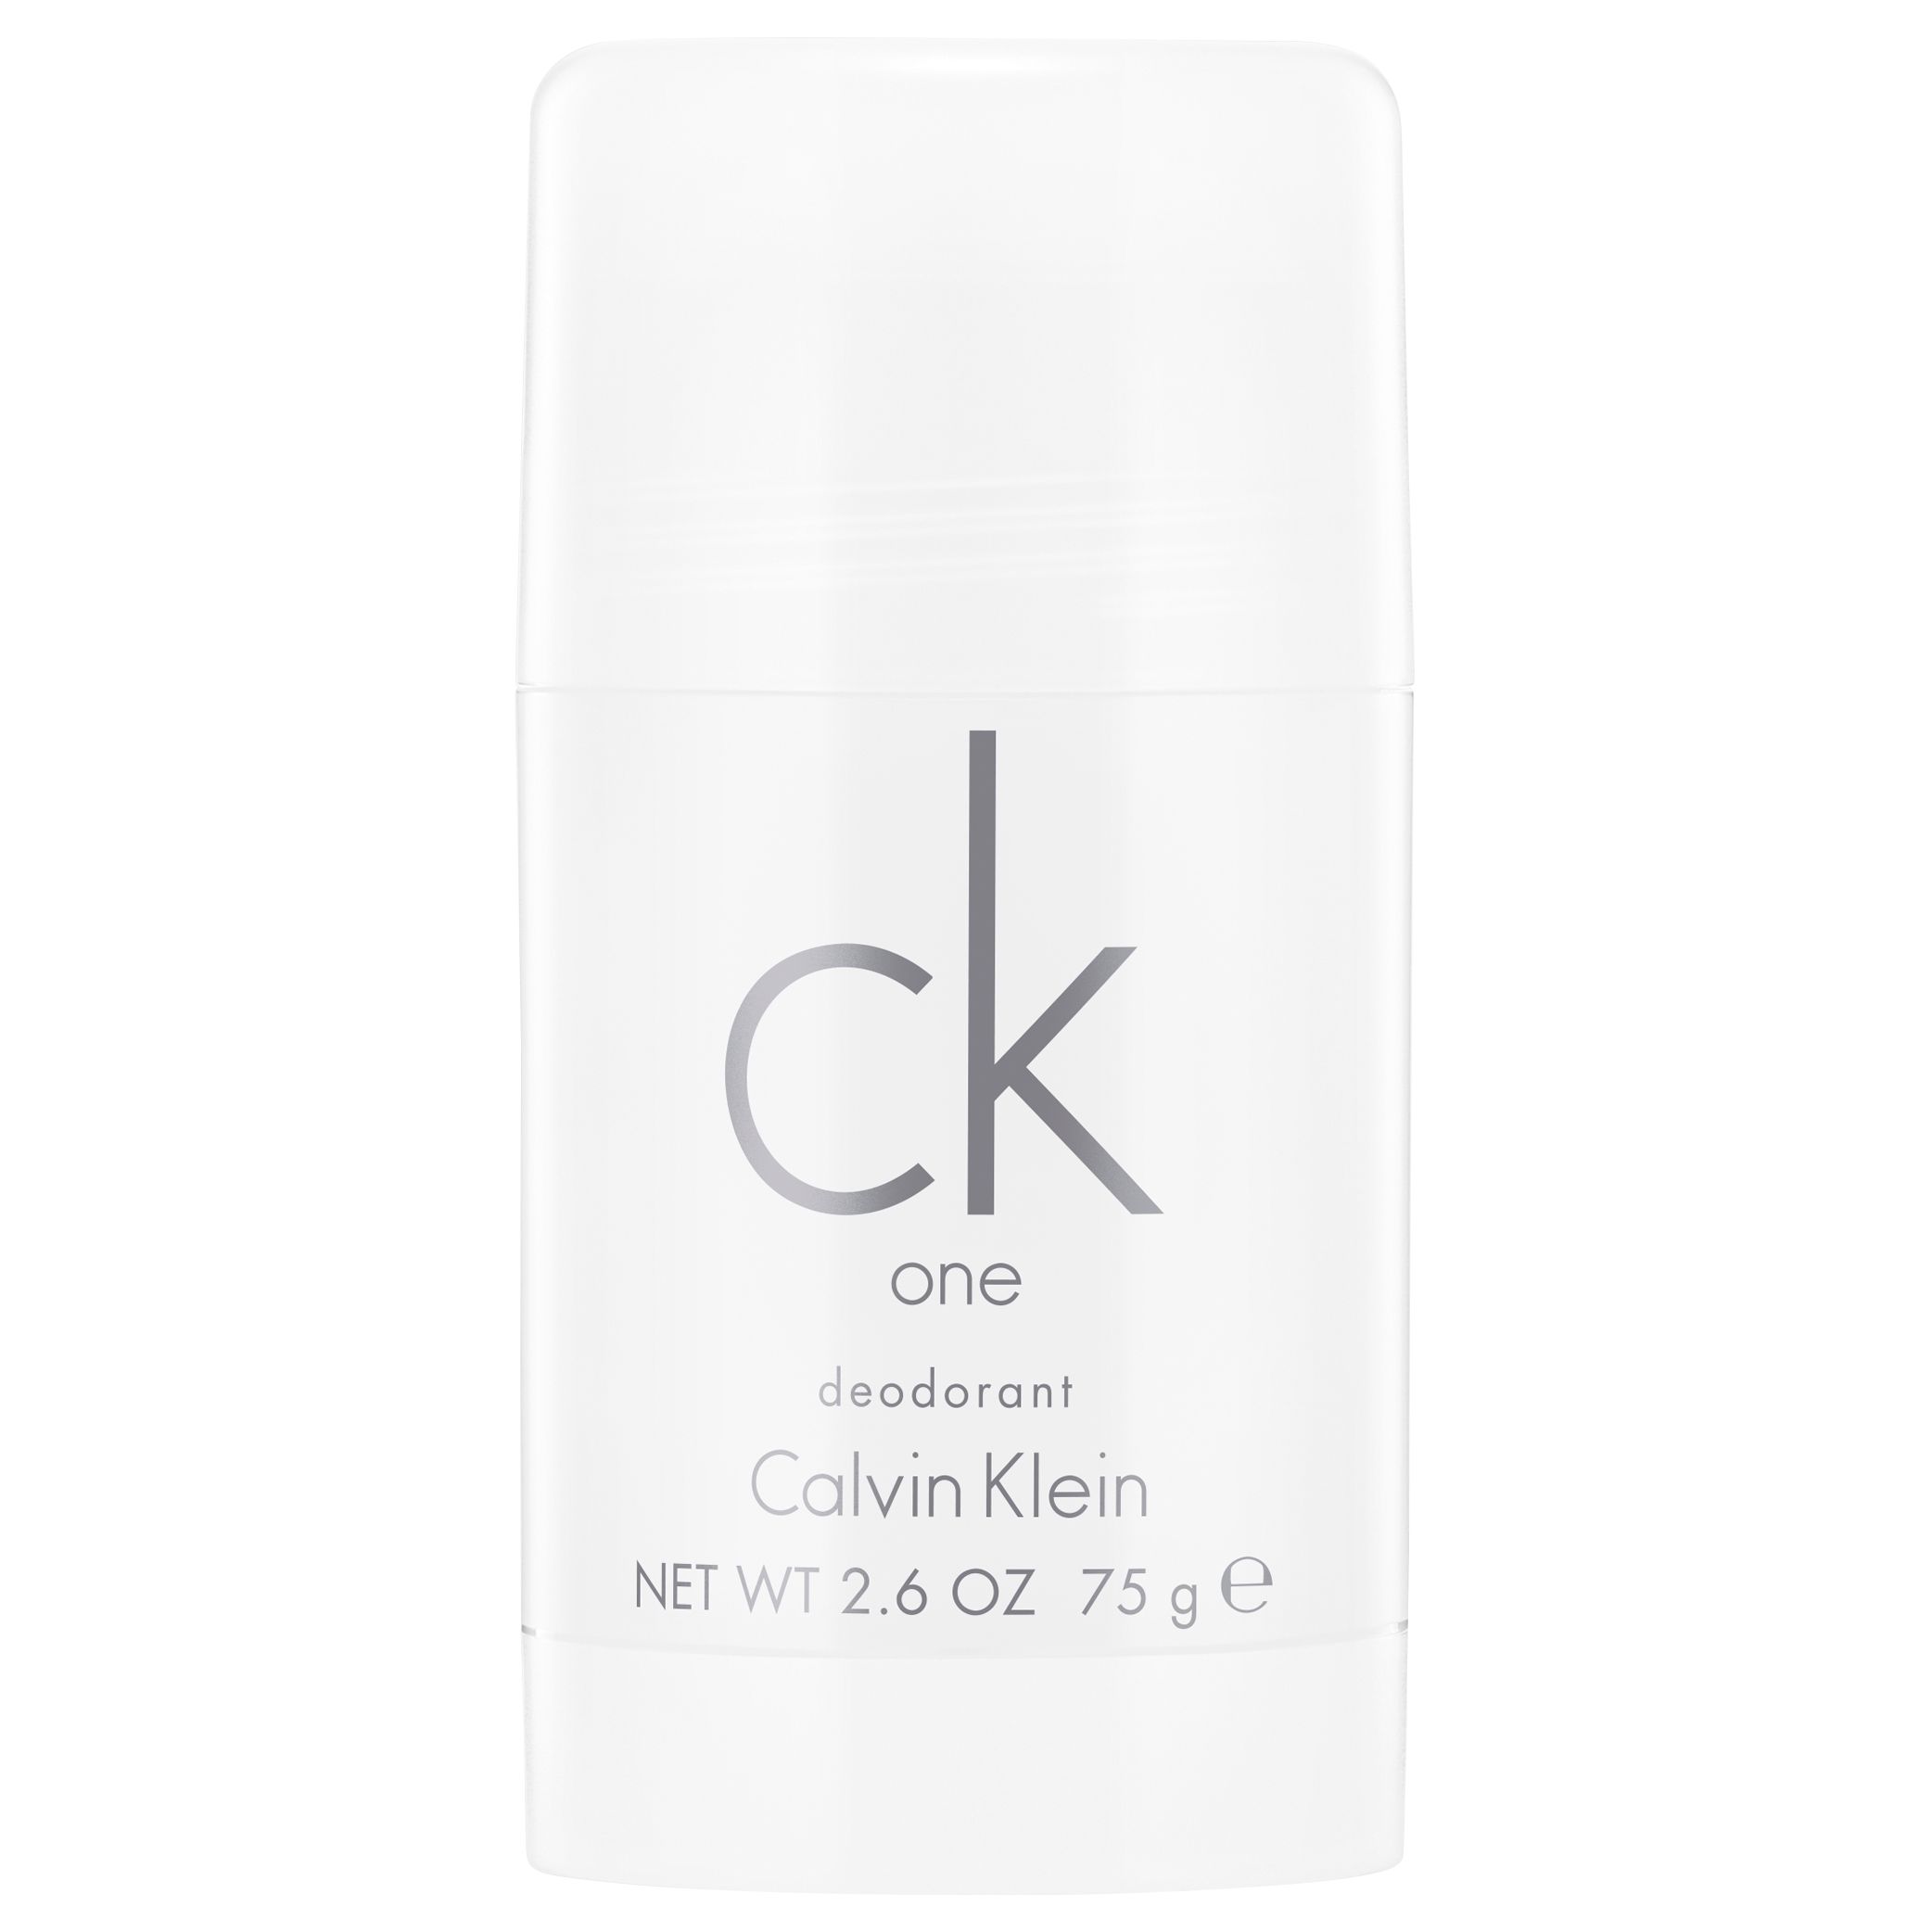 CK One, Deodorant Stick, 75g